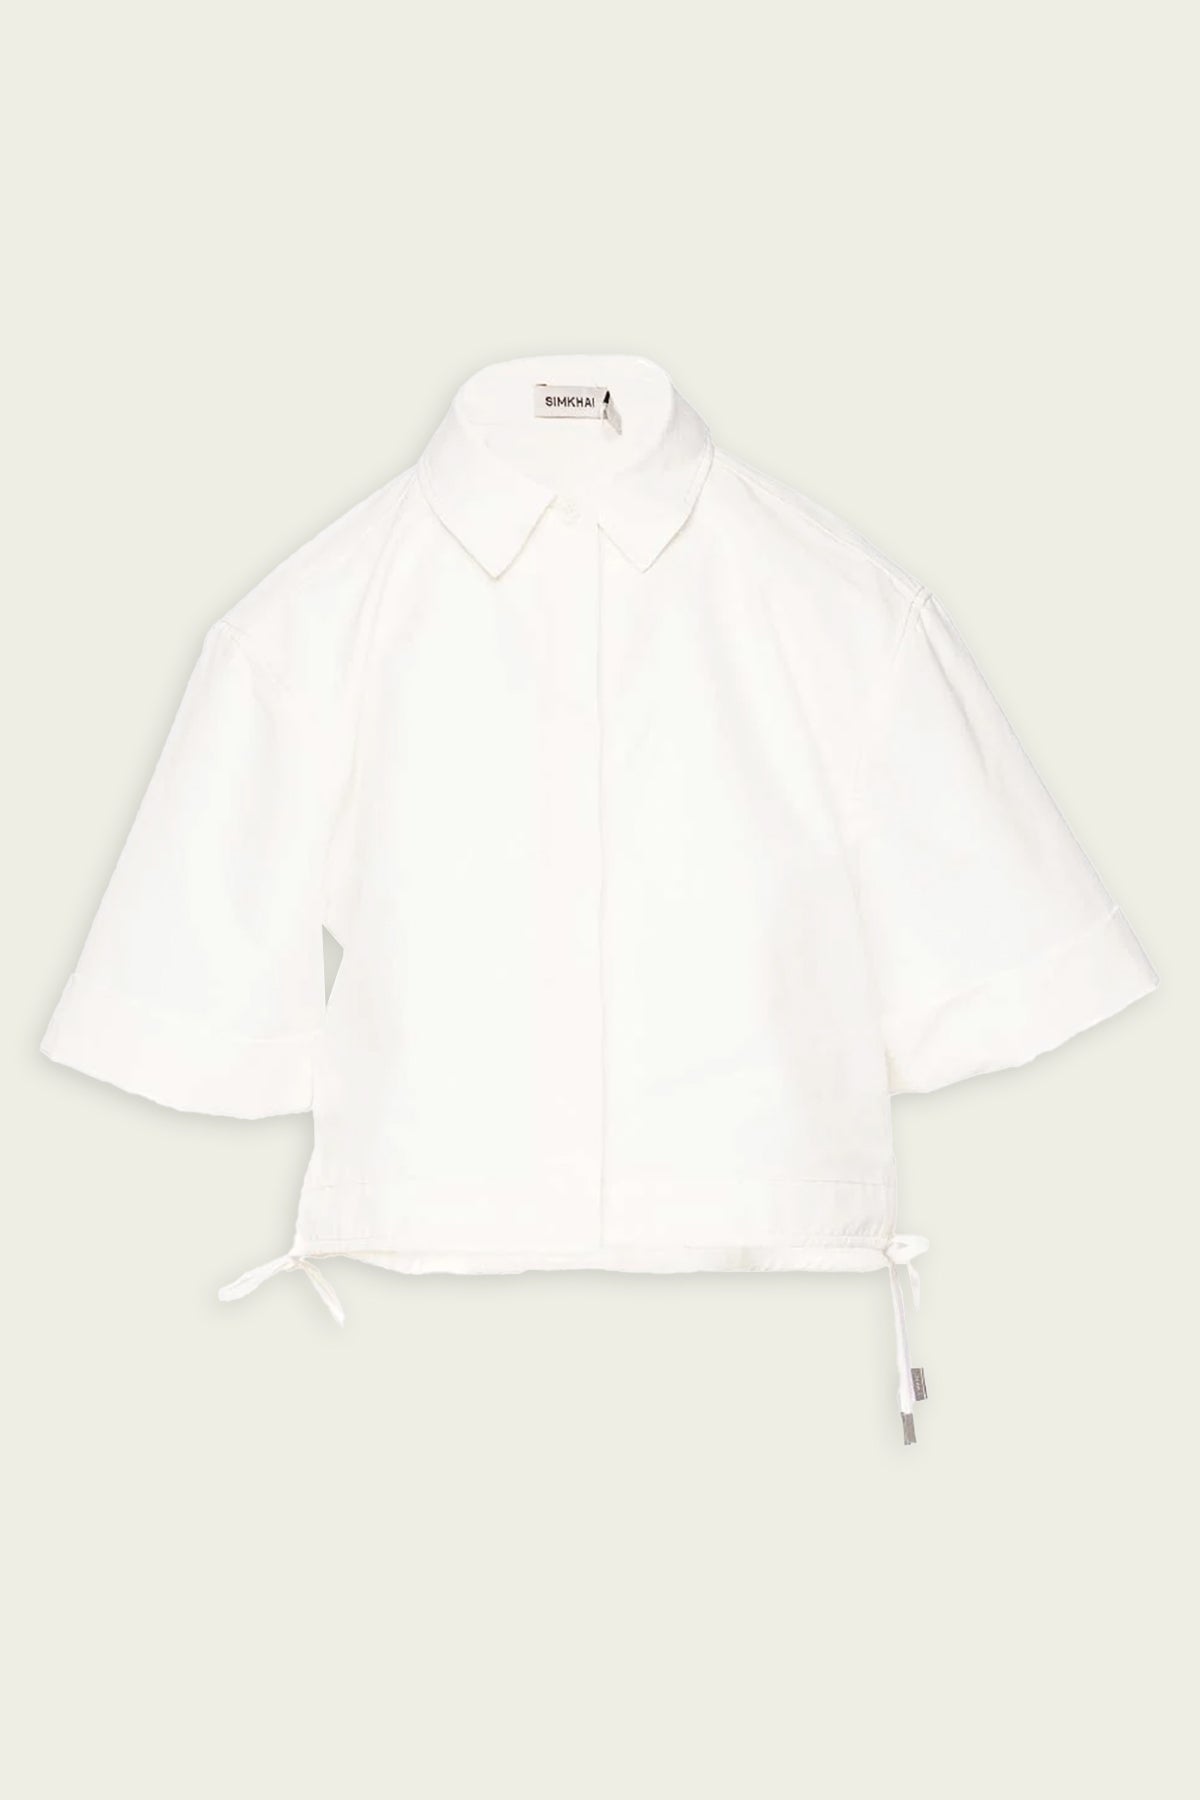 Ryett Short Sleeve Cropped Shirt in White - shop-olivia.com